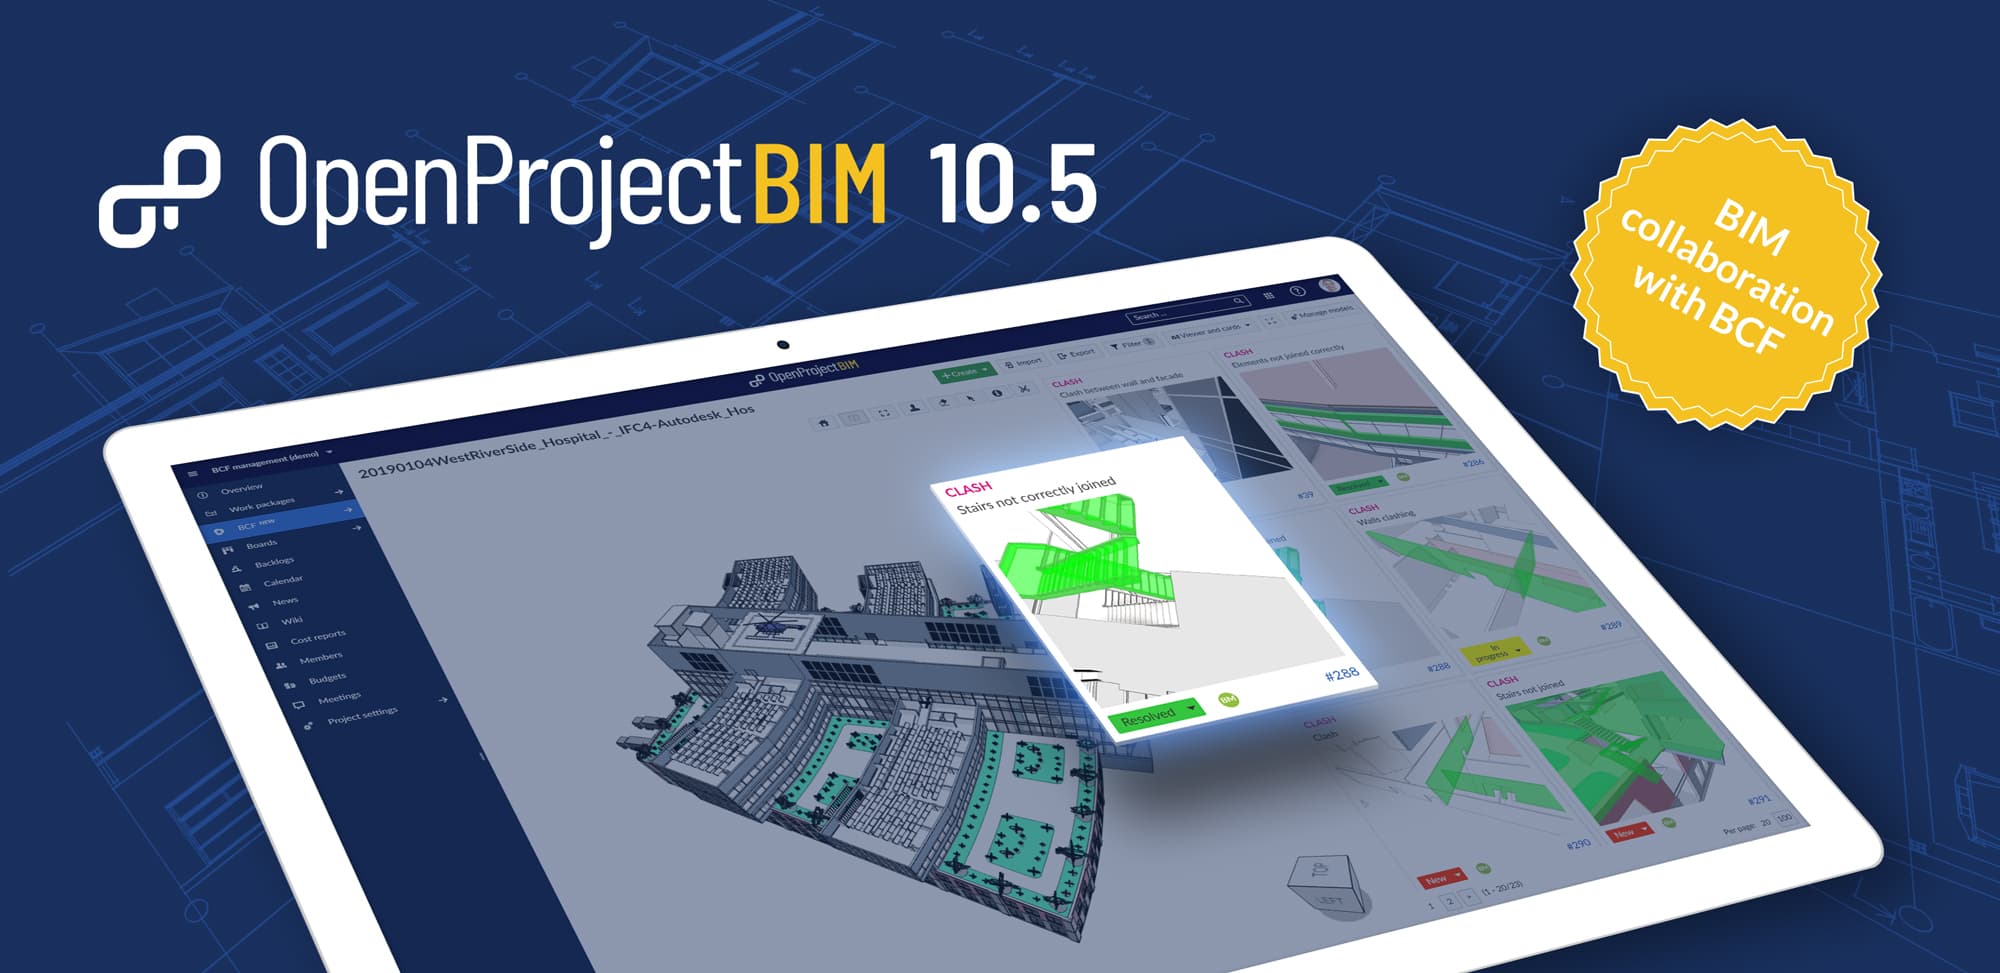 OpenProject BIM 10.5: BCF Management extends BIM project management